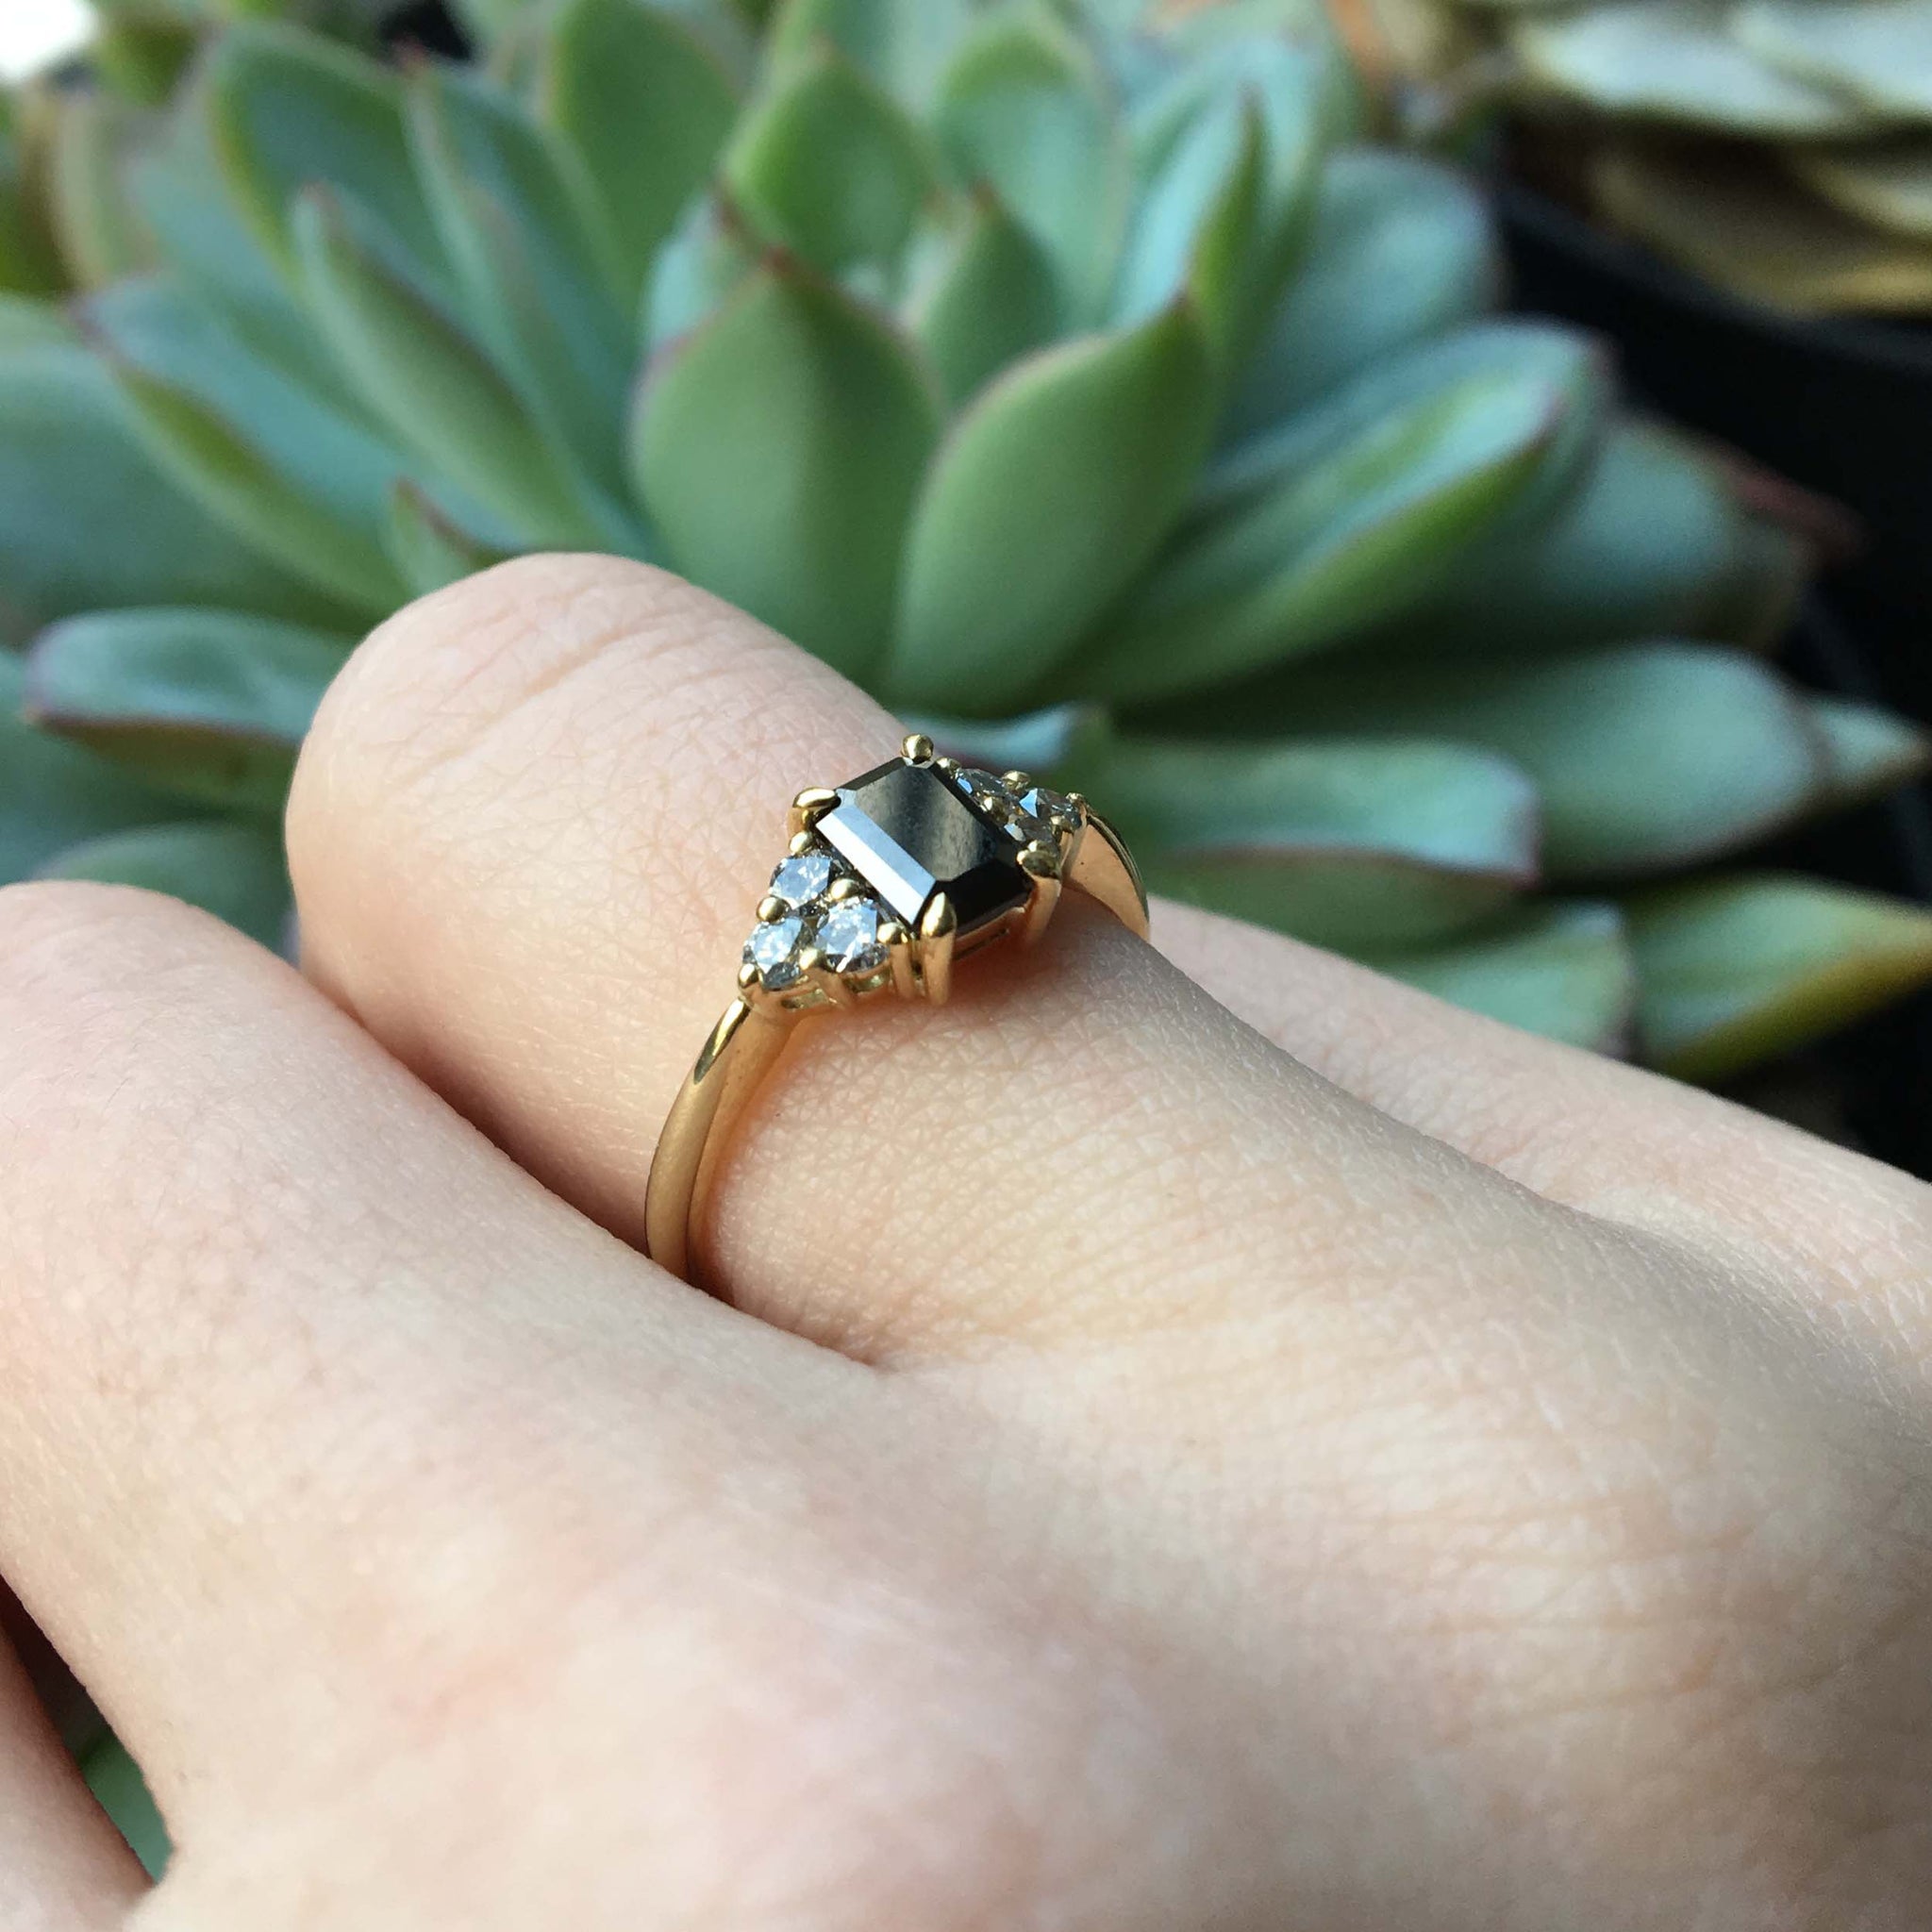 Black Diamond Engagement Ring by Yasmin Everley